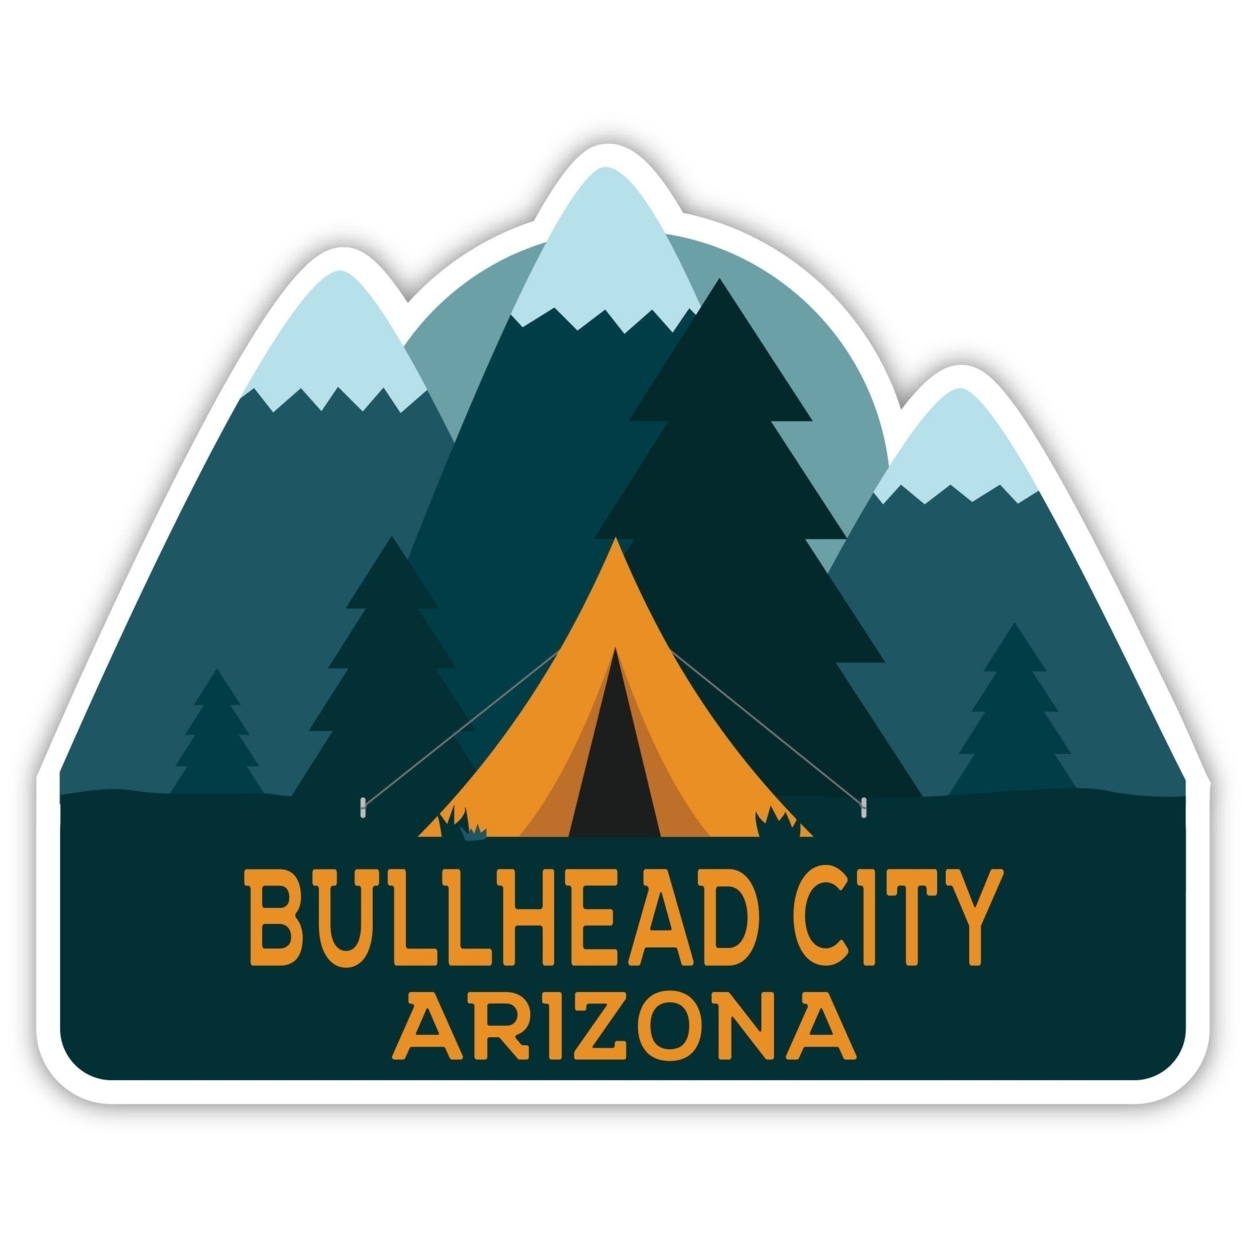 Bullhead City Arizona Souvenir Decorative Stickers (Choose Theme And Size) - Single Unit, 6-Inch, Adventures Awaits